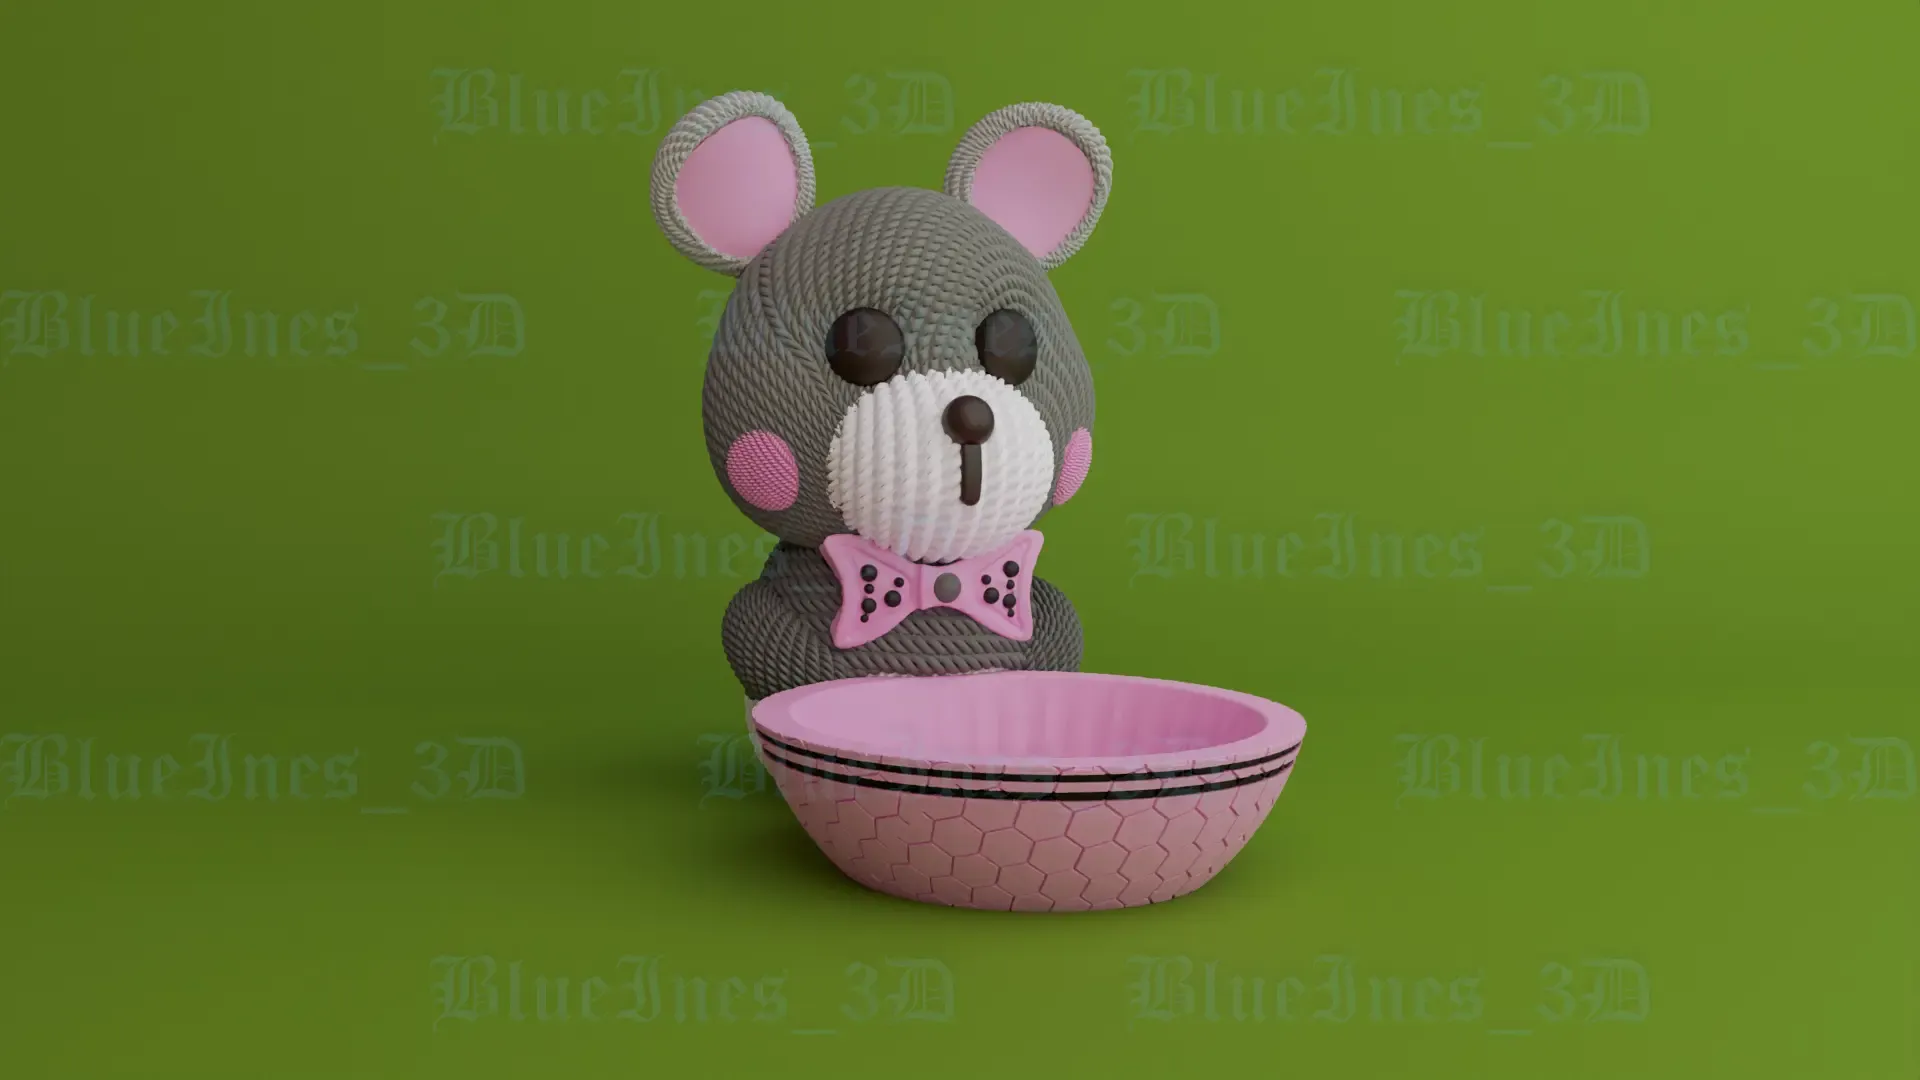 Cute crochet teddy bear with (honeycomb) bowl